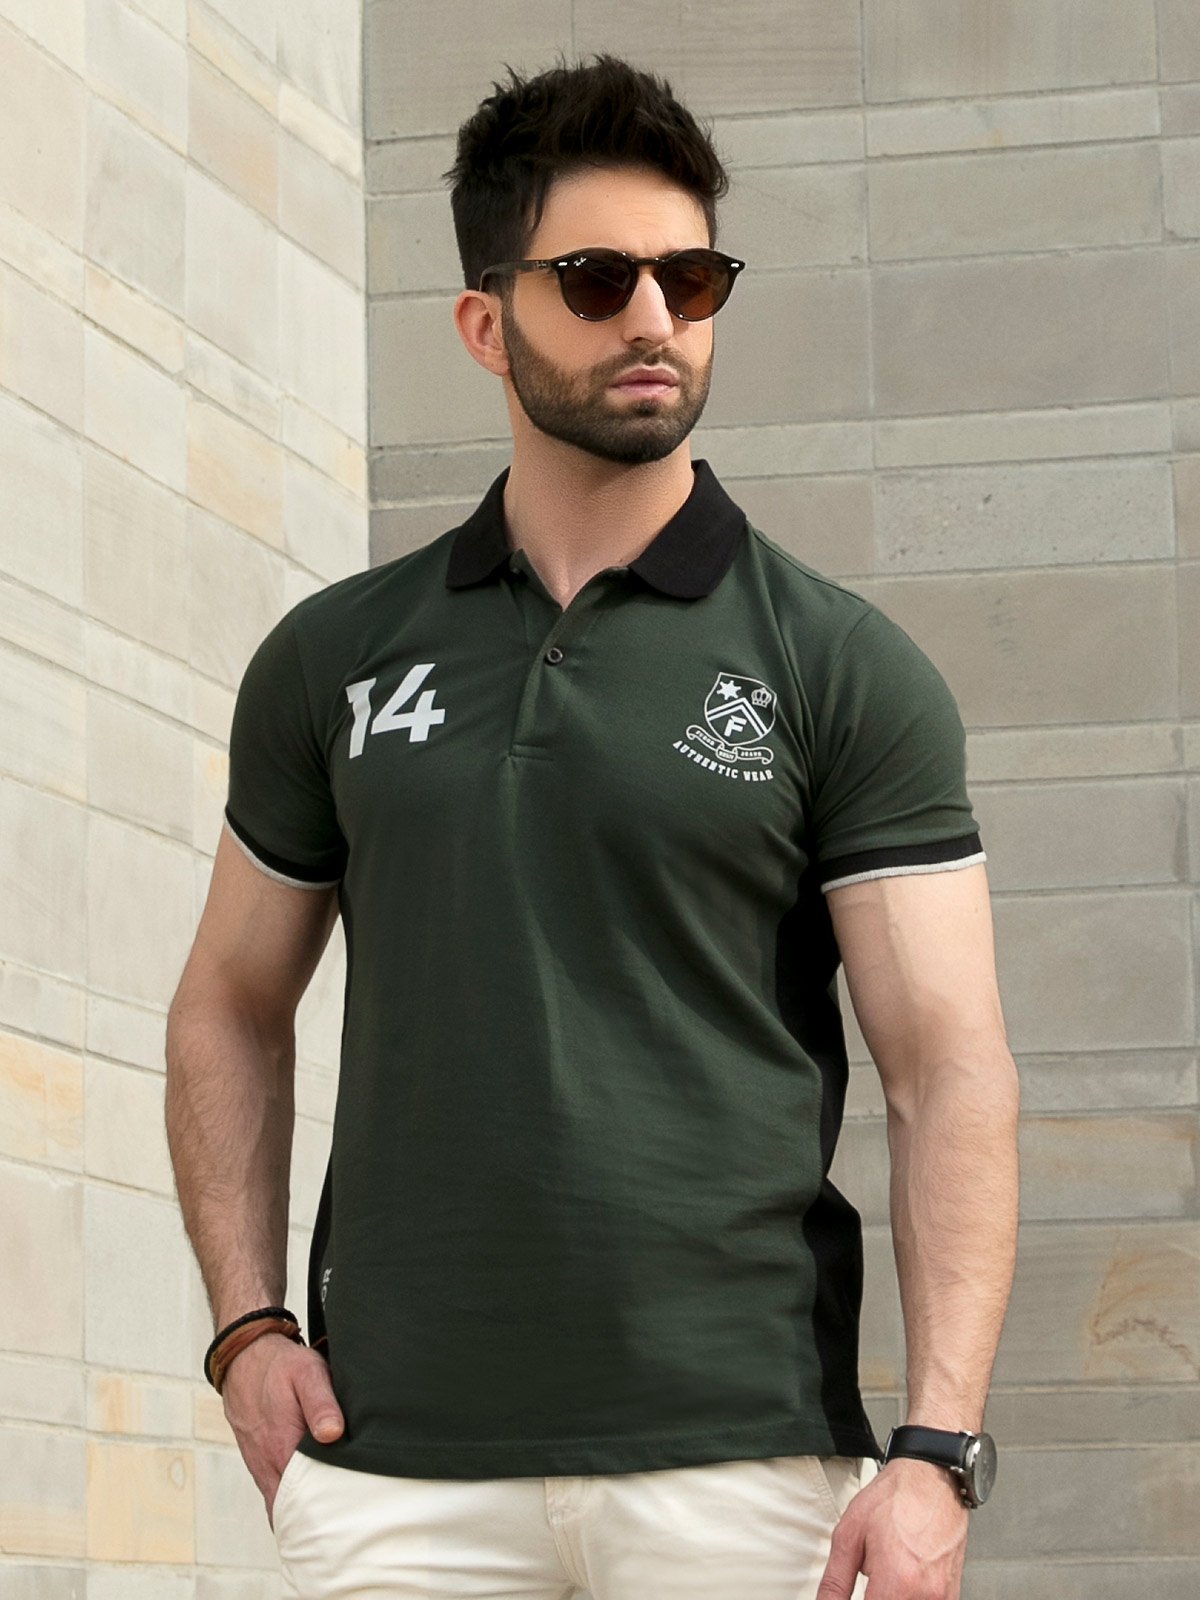 Men's Dark Green Polo Shirt - FMTCP18-009